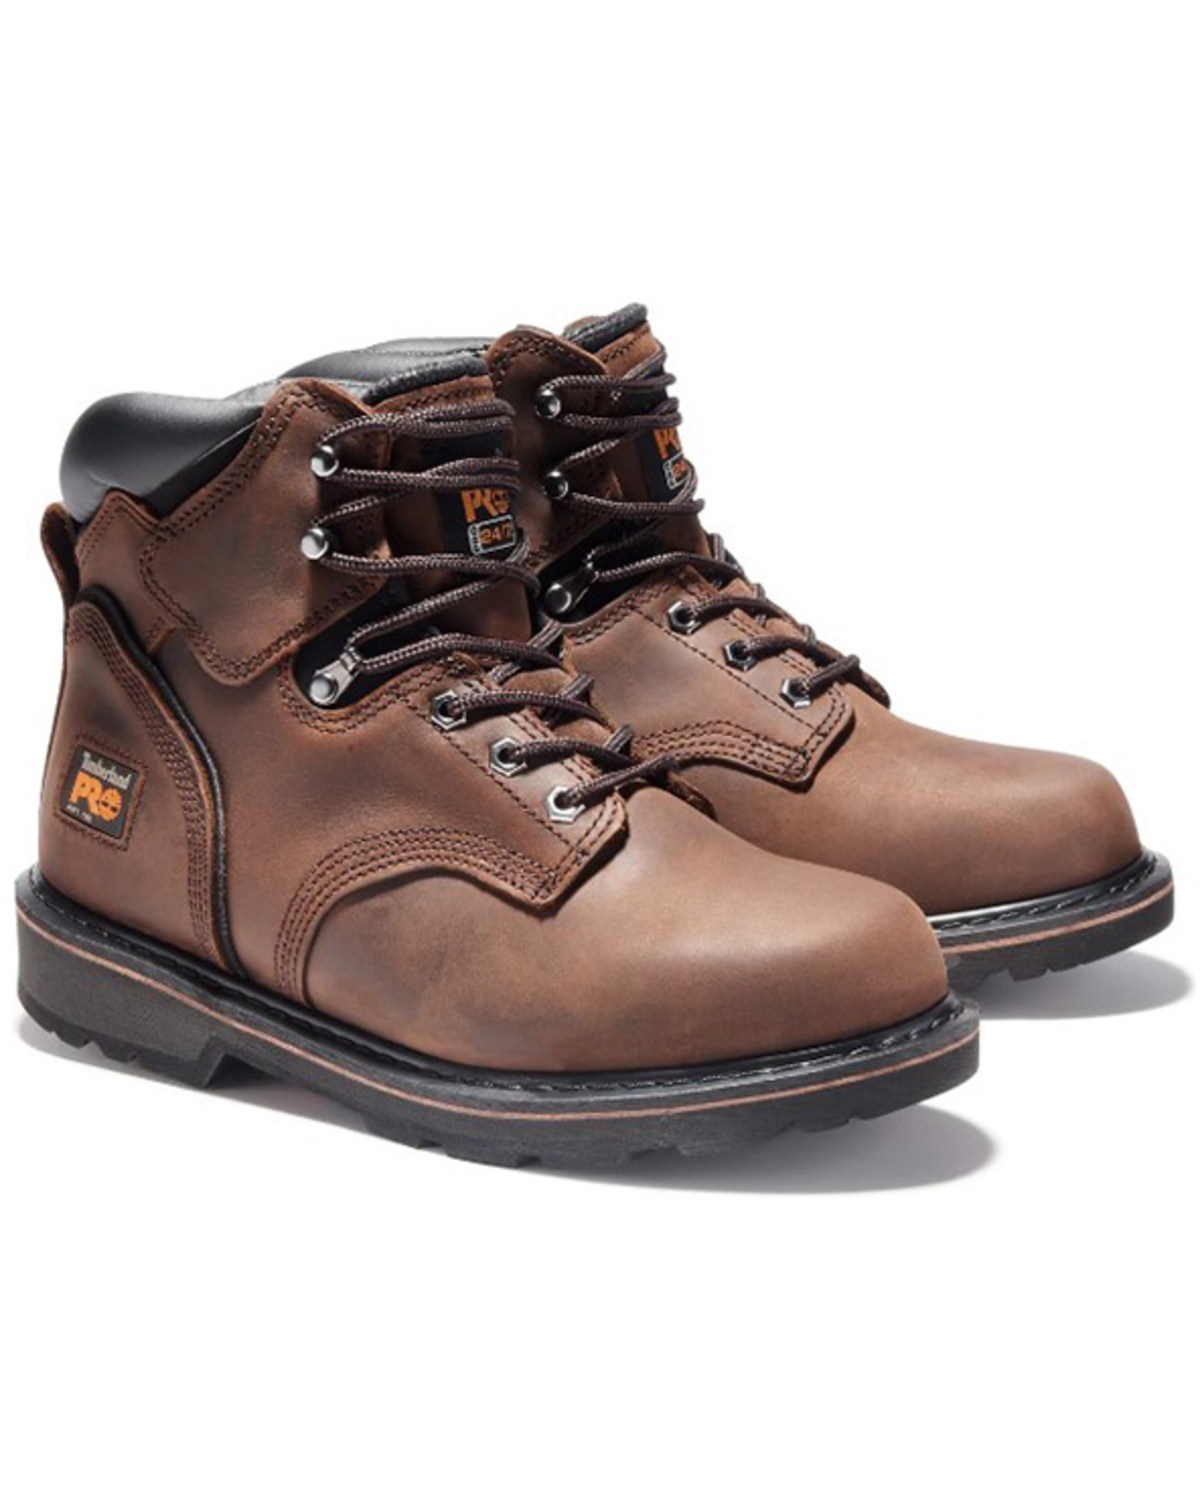 Timberland Men's 6" Pit Boss Work Boots - Soft Toe